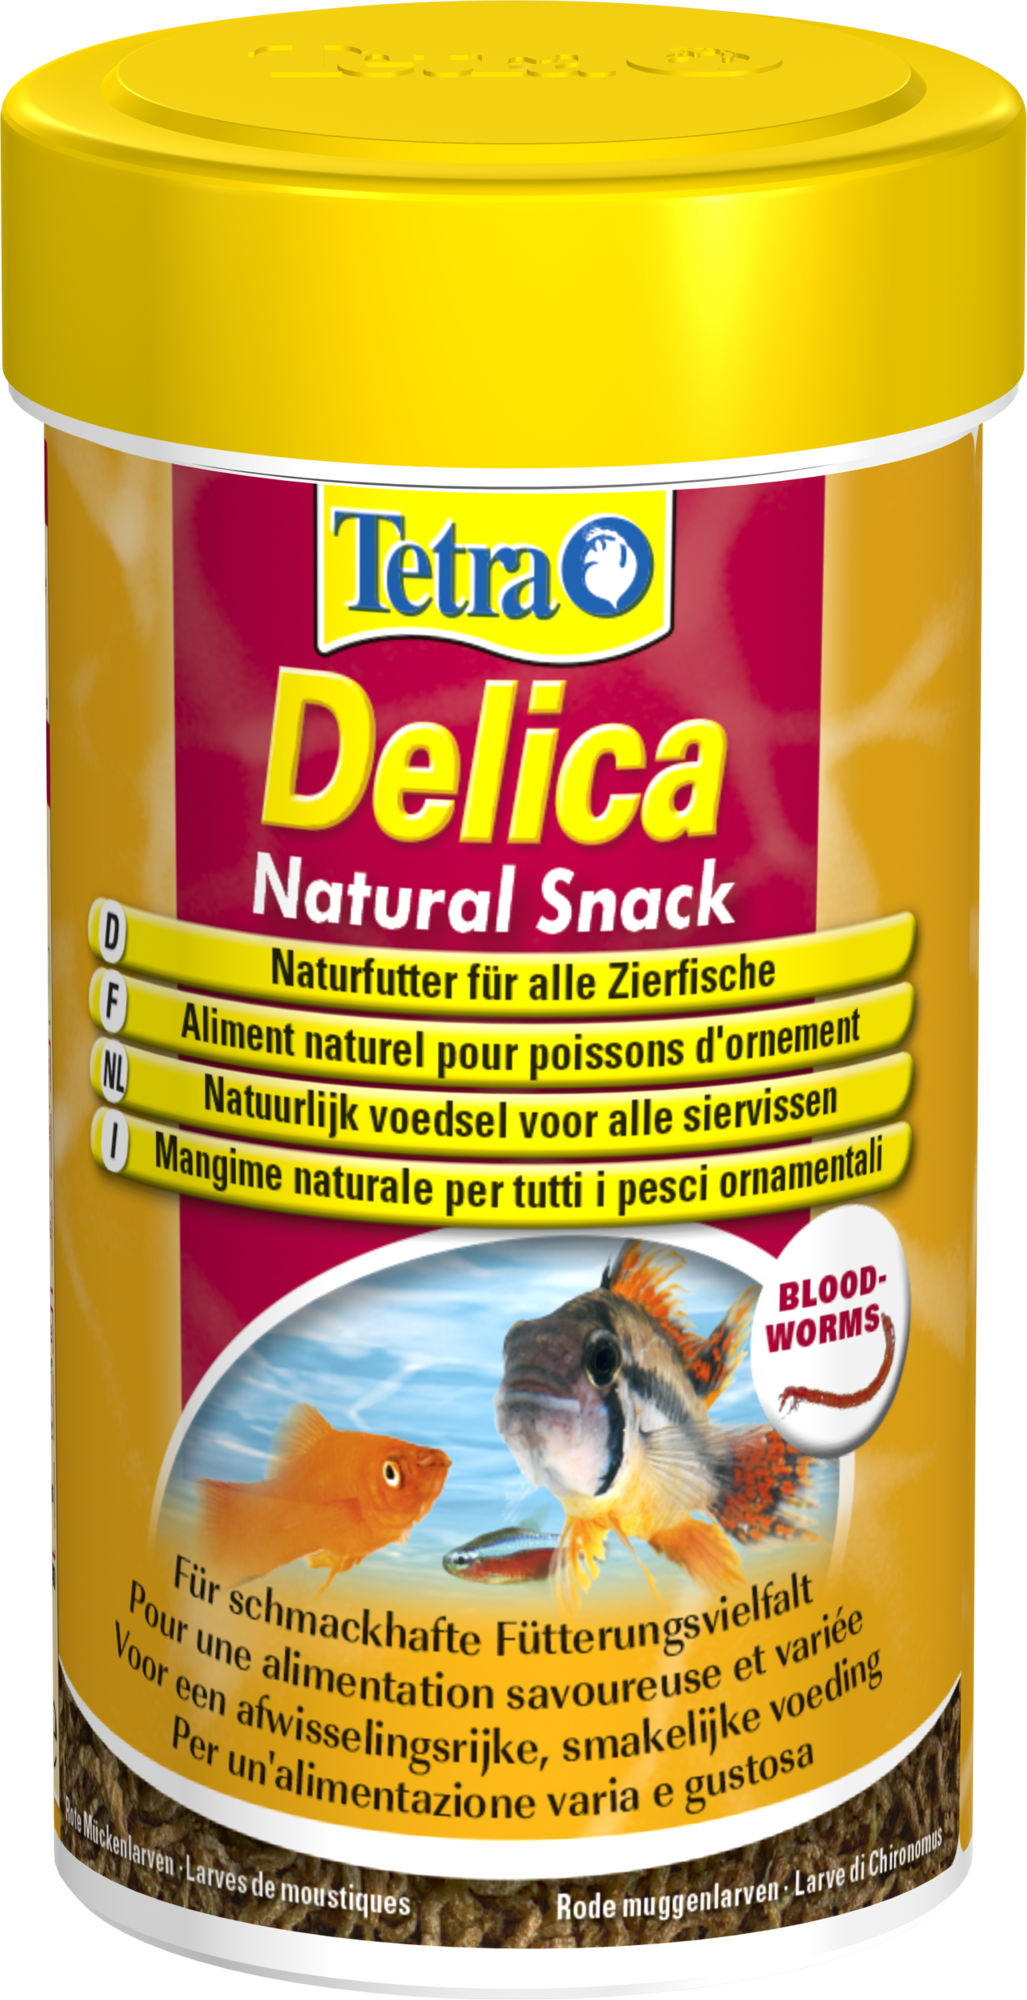 JBL NovoGranoMix XXS 100 ml nourriture en granulés pour petits poissons d' aquarium de 1 à 3 cm - Nourritures eau douce/Nourriture pour poissons  tropicaux -  - Aquariophilie